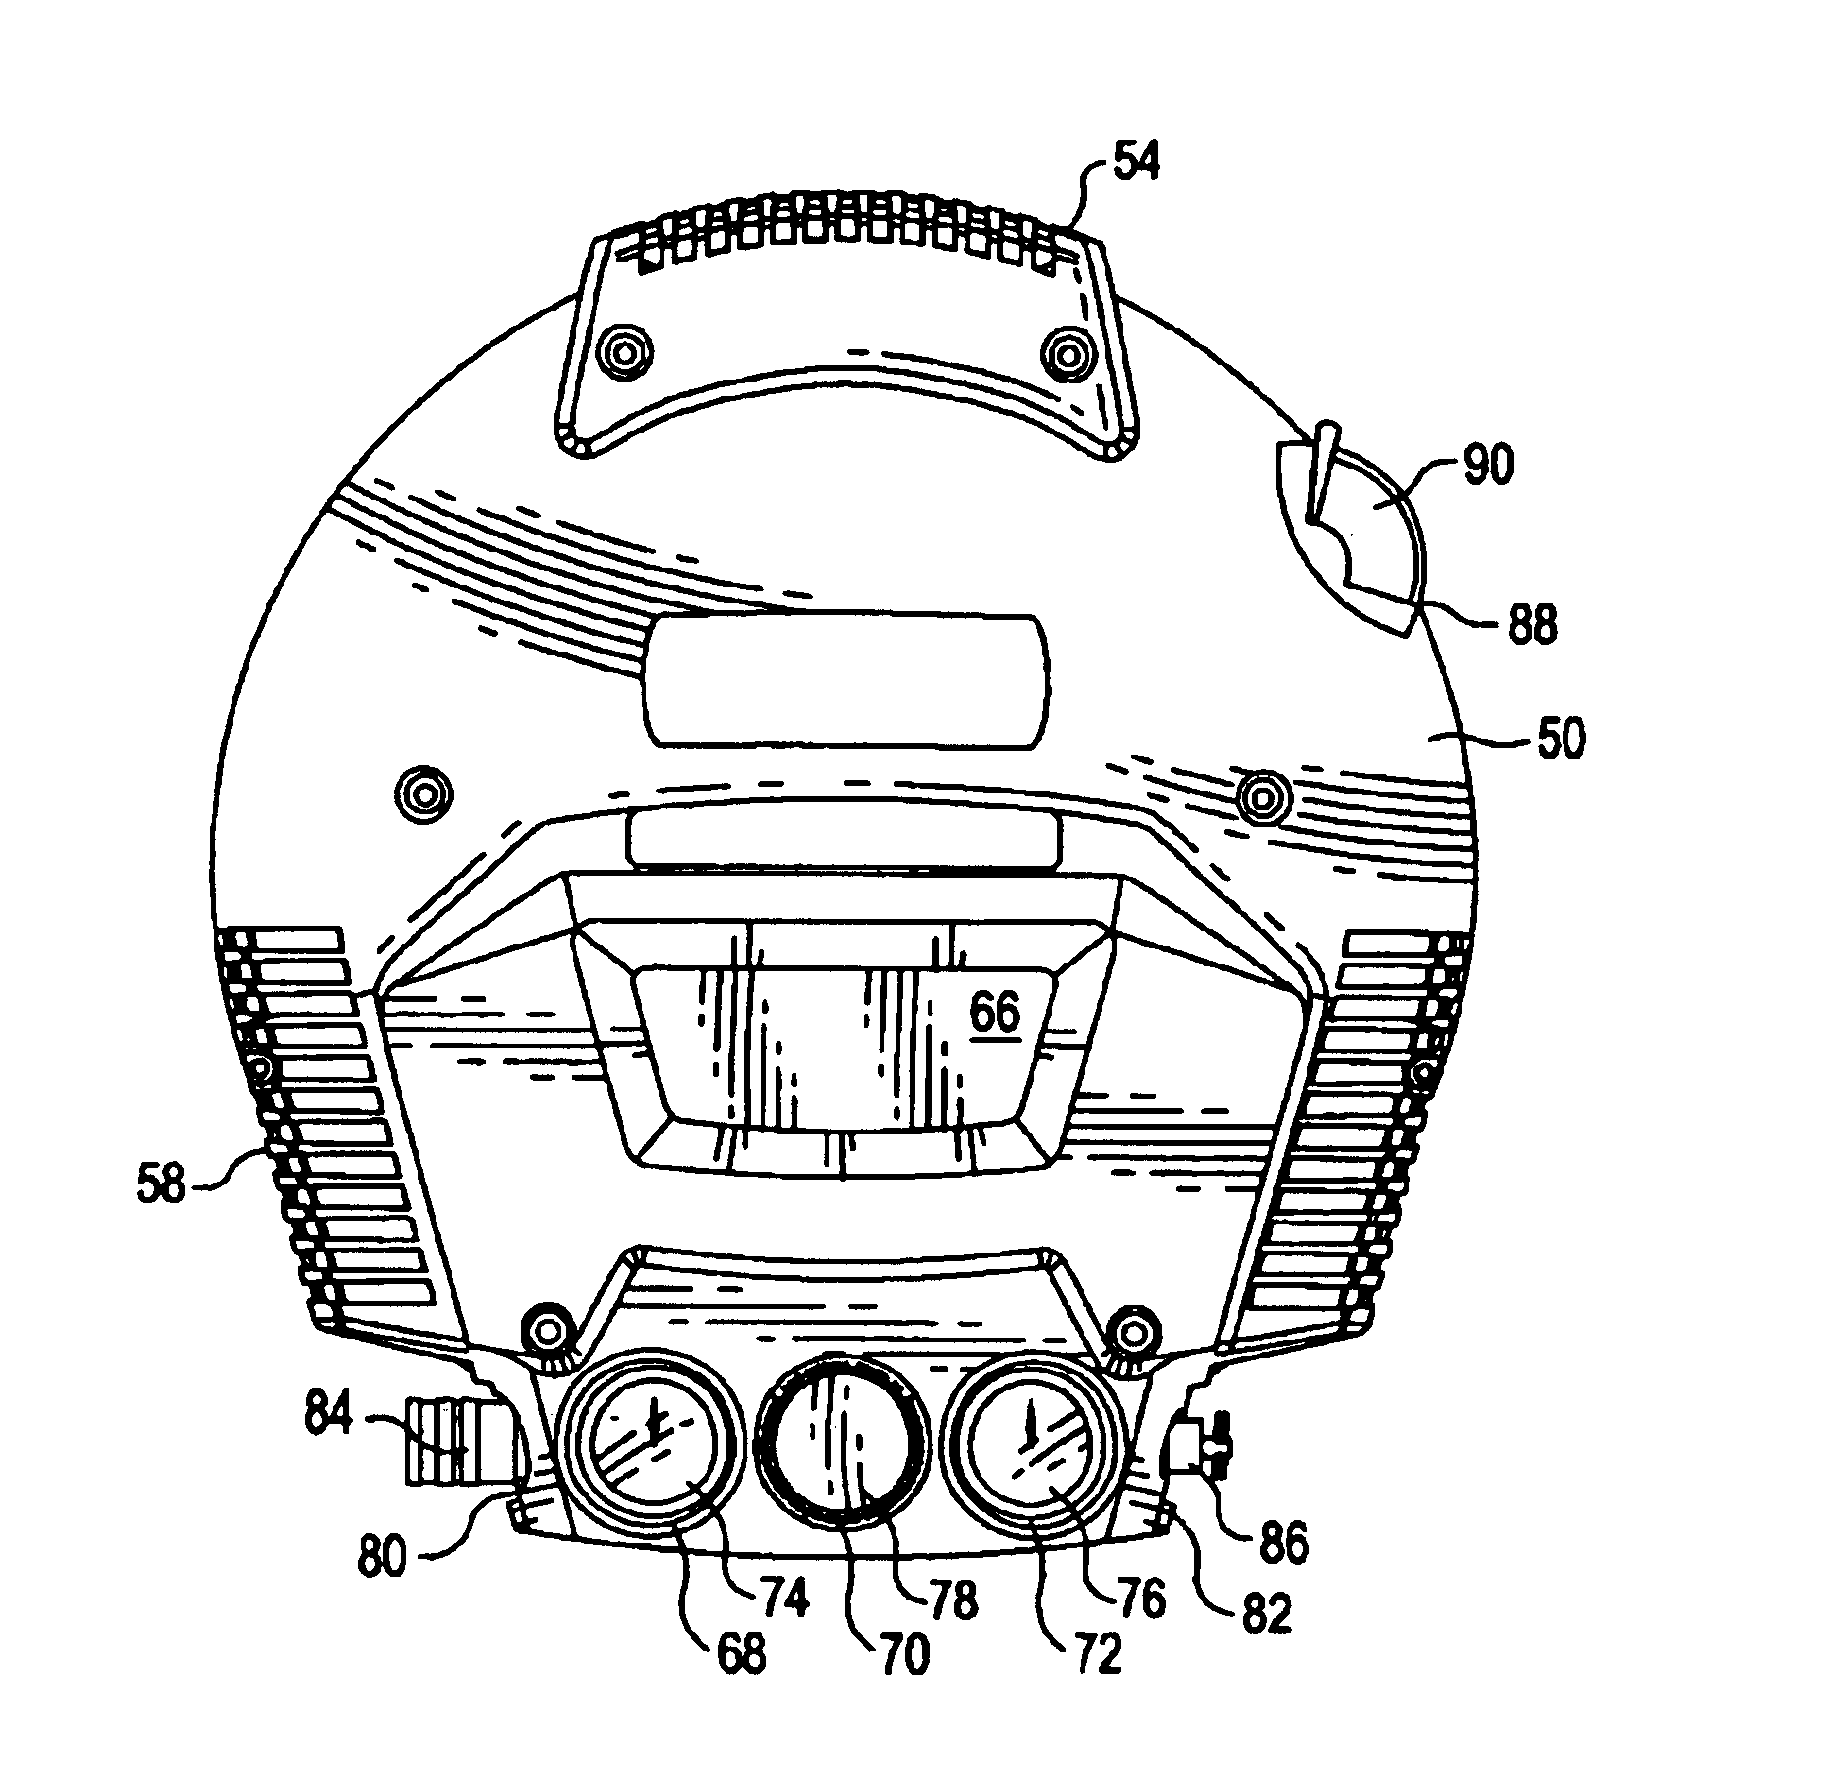 Air compressor mounted on a compressor tank